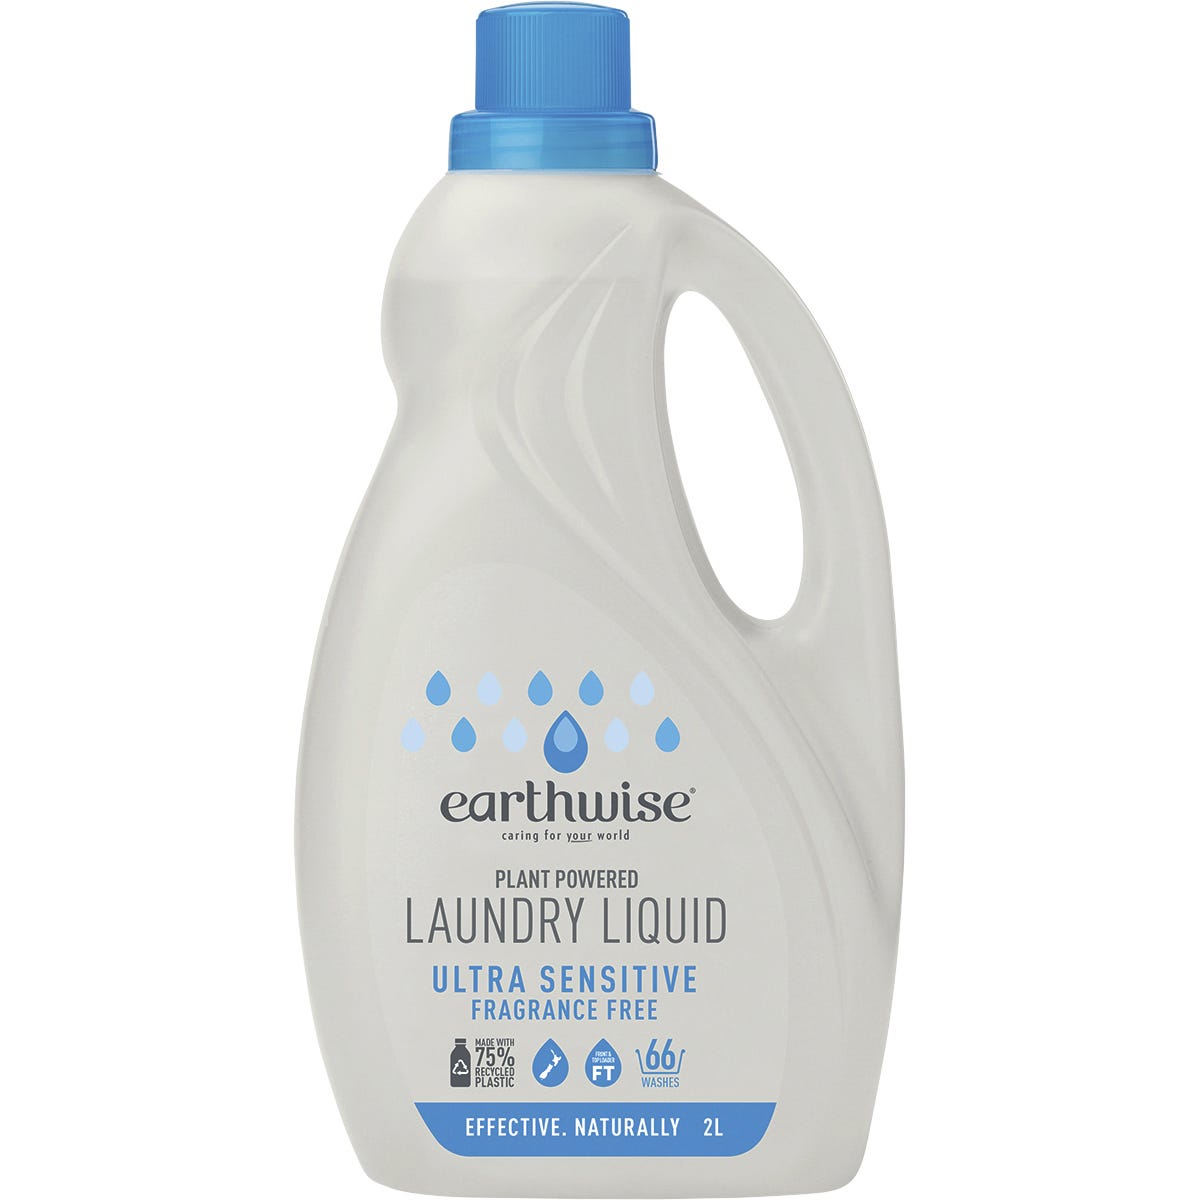 Laundry Liquid Fragrance Free